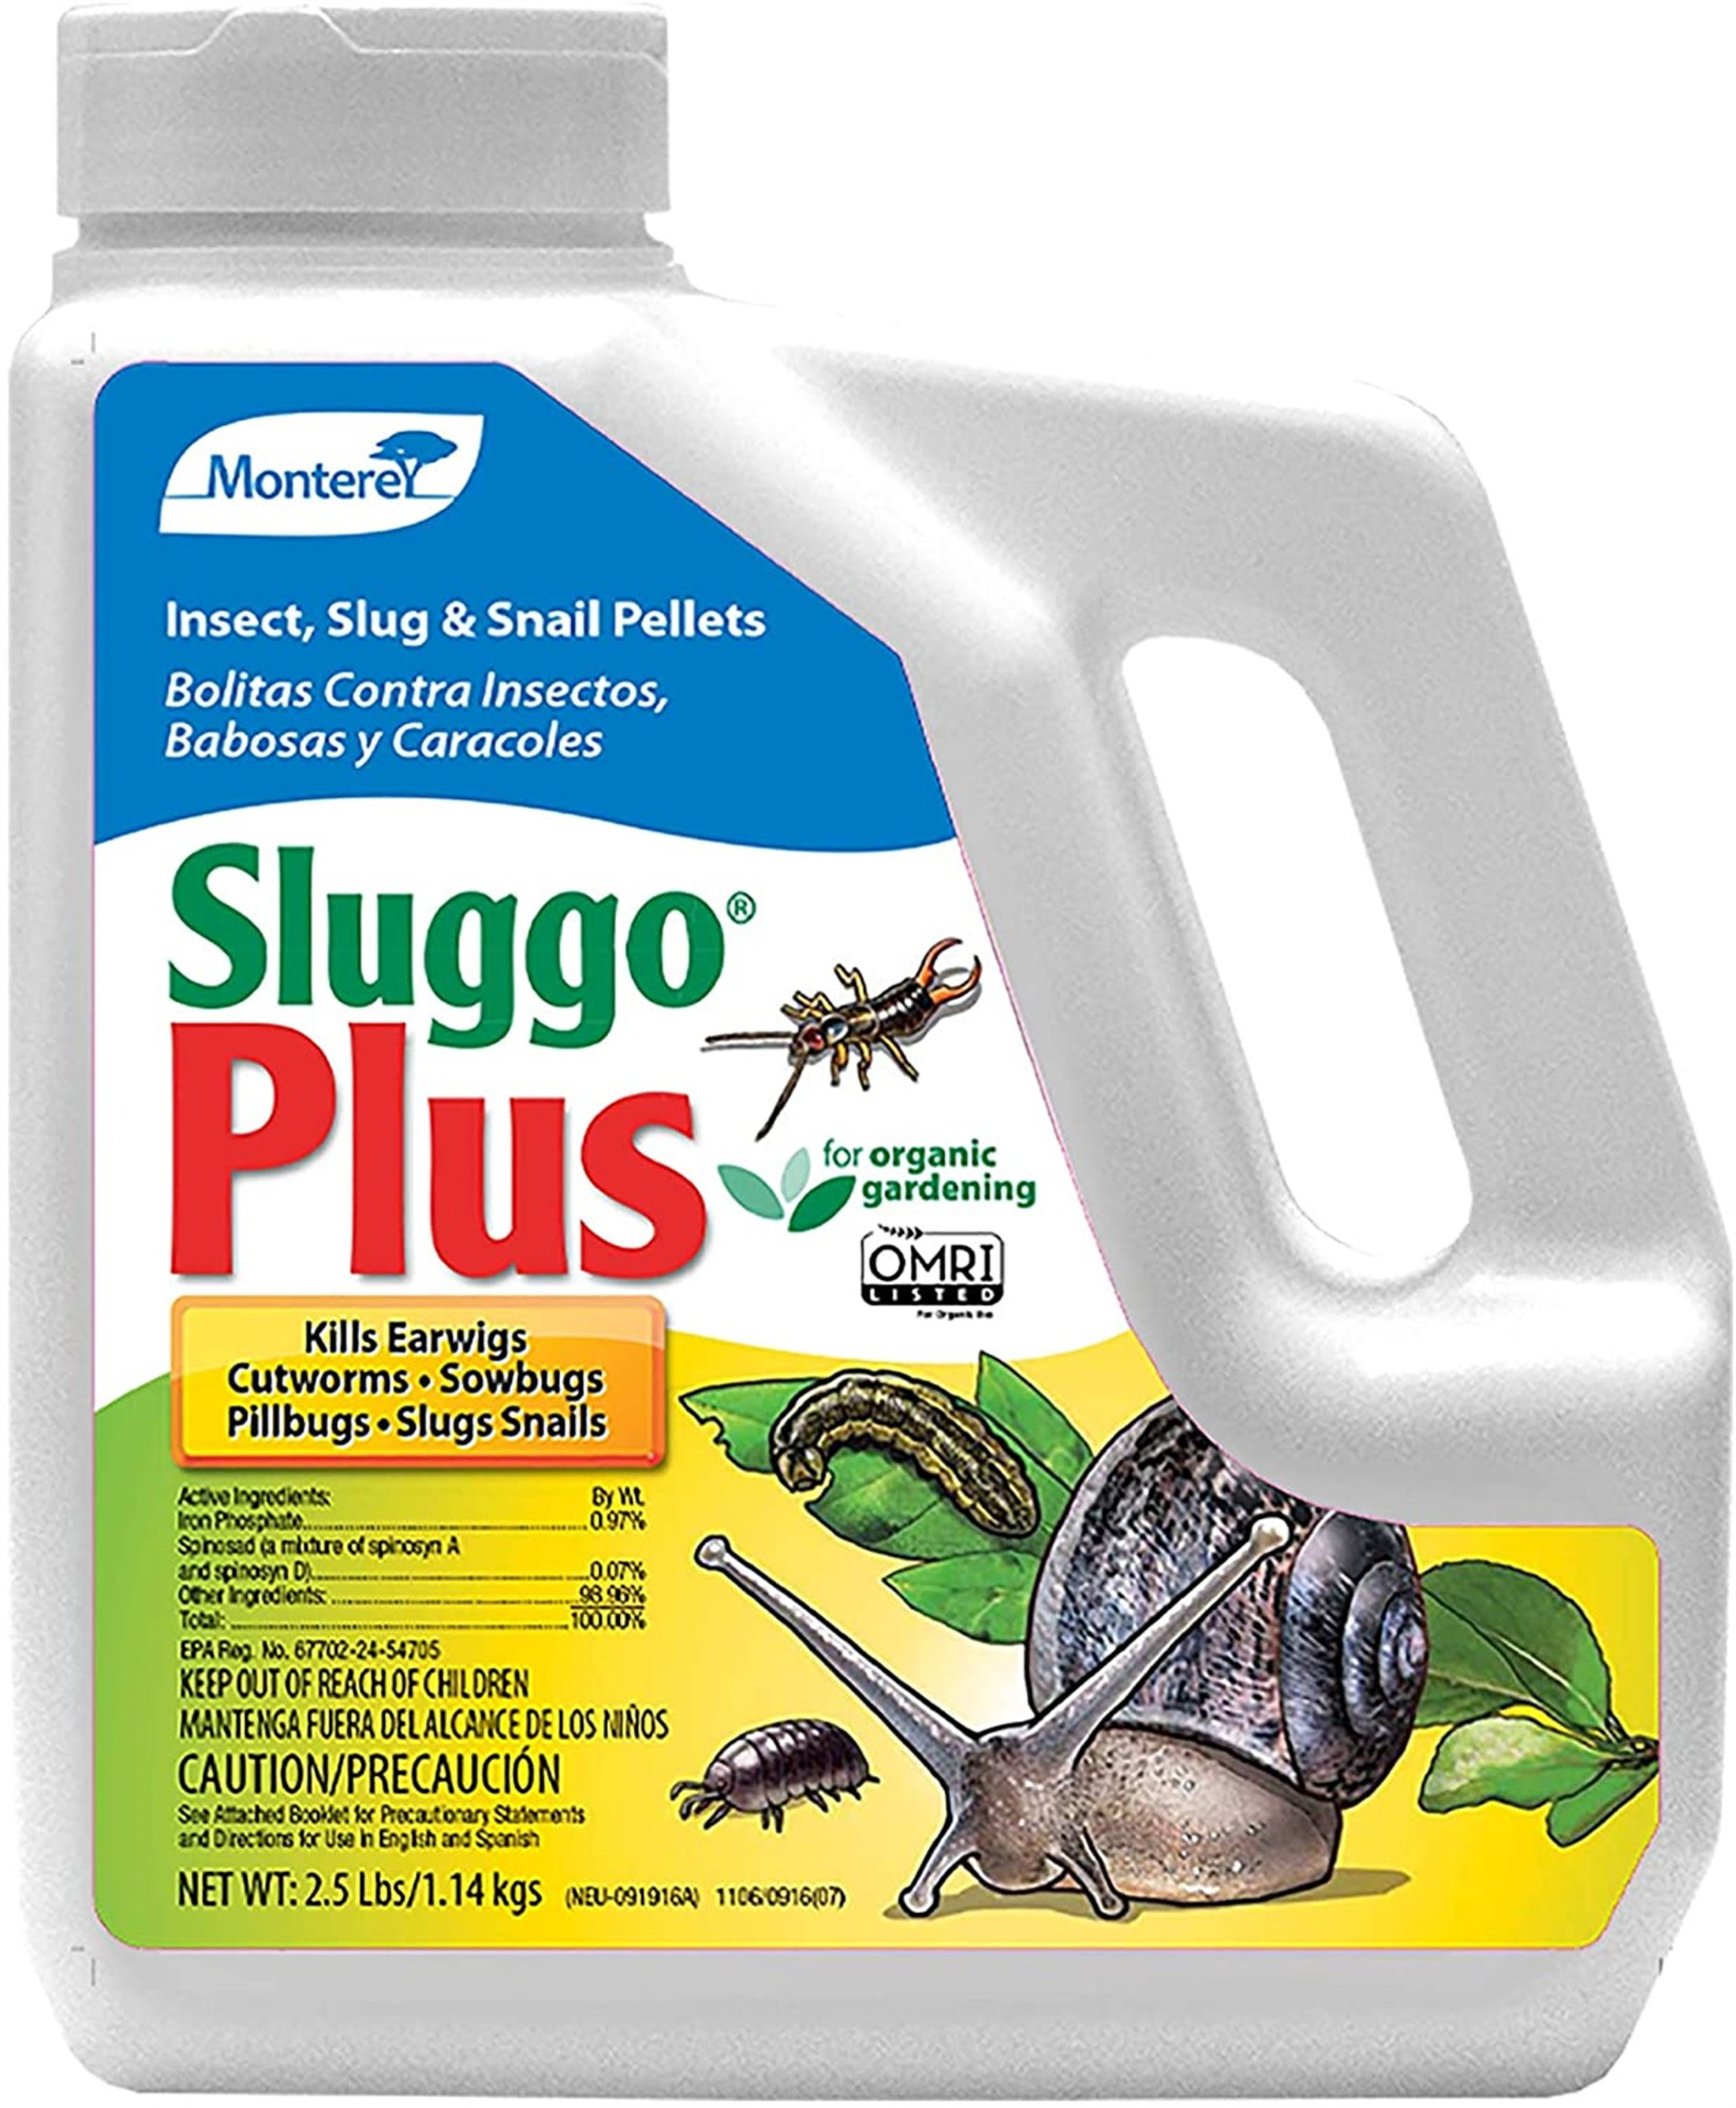 Monterey Sluggo Plus Insect, Slug & Snail Pelets for Organic Gardening, 2.5 lbs